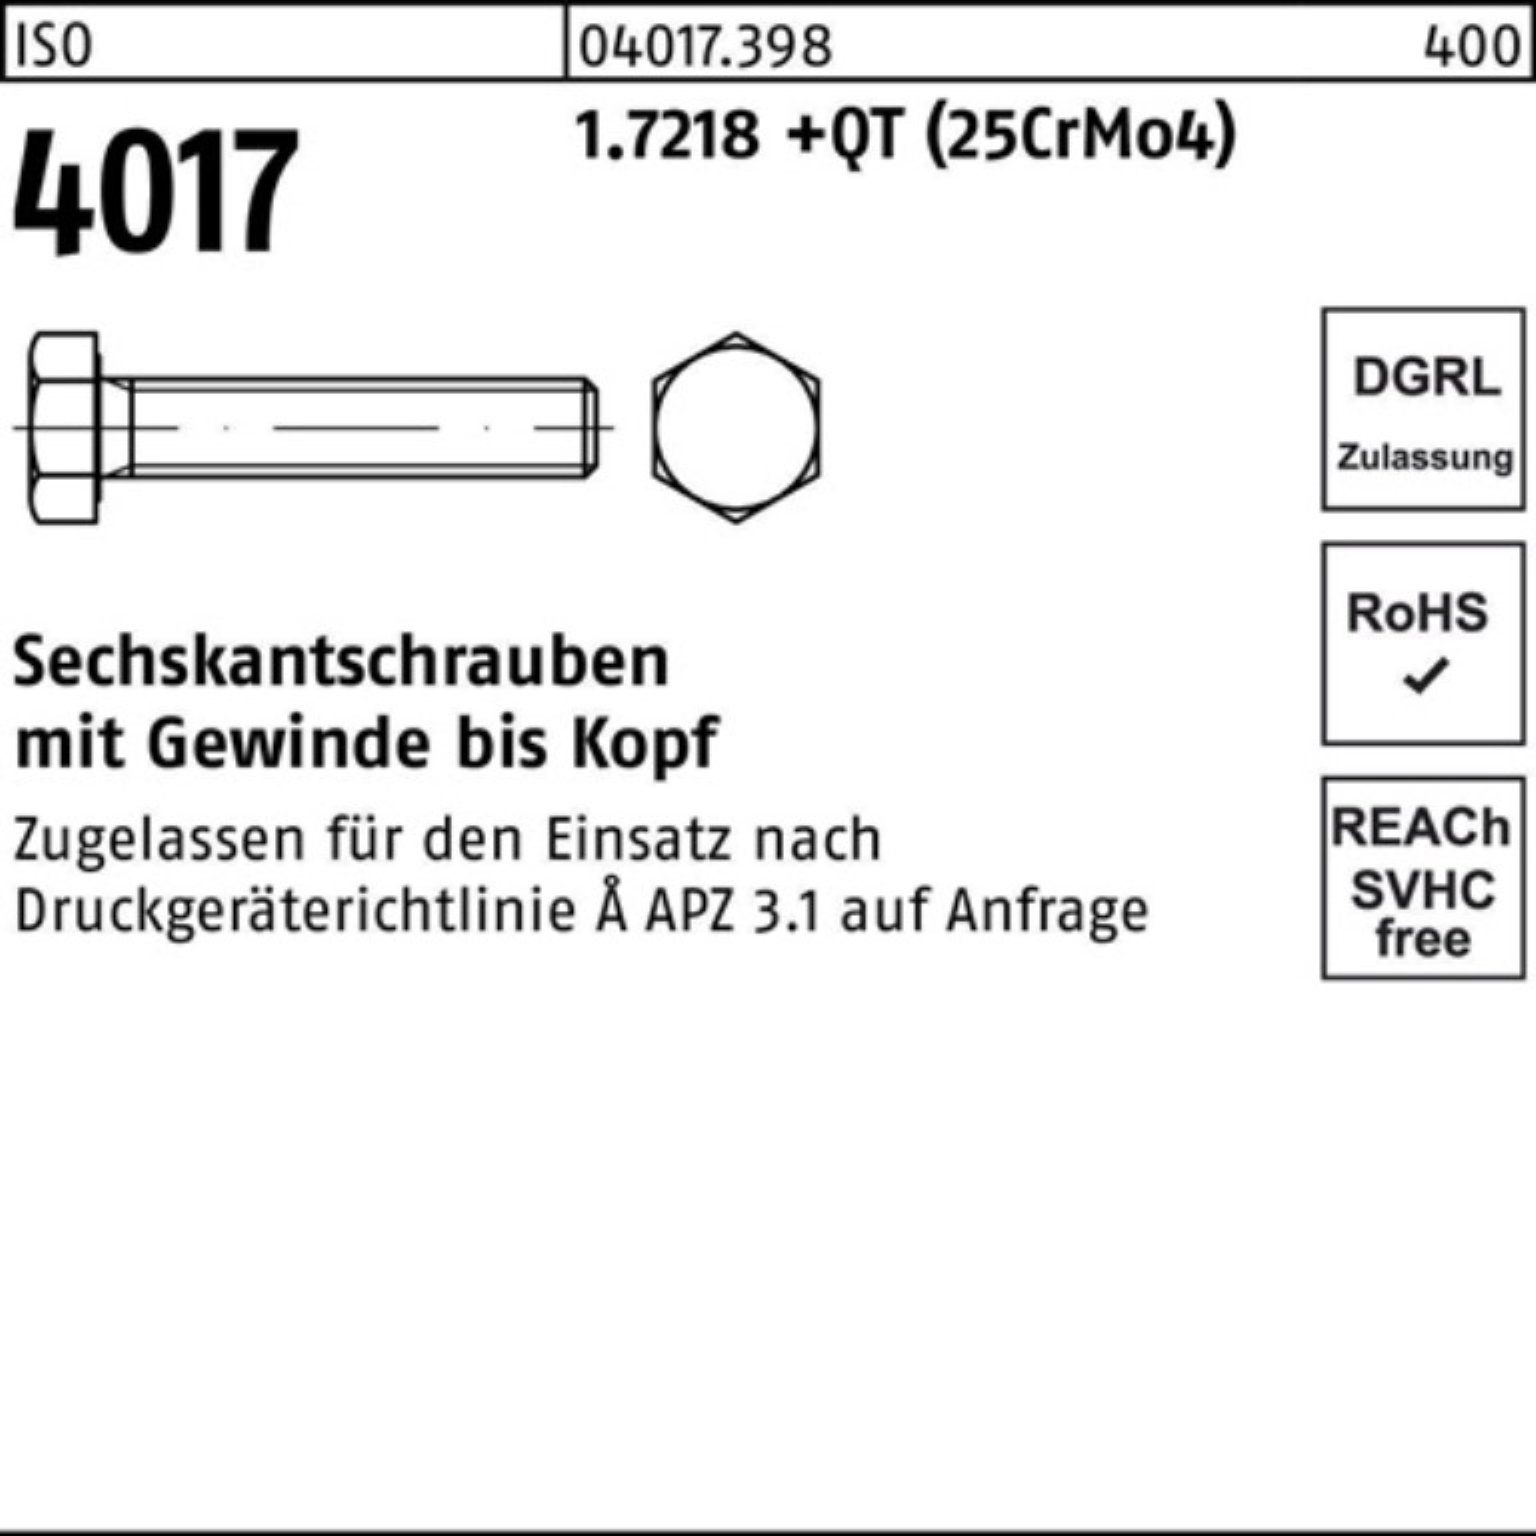 Pack VG Bufab M36x 1.7218 130 ISO Sechskantschraube 100er +QT 4017 Sechskantschraube (25CrMo4)